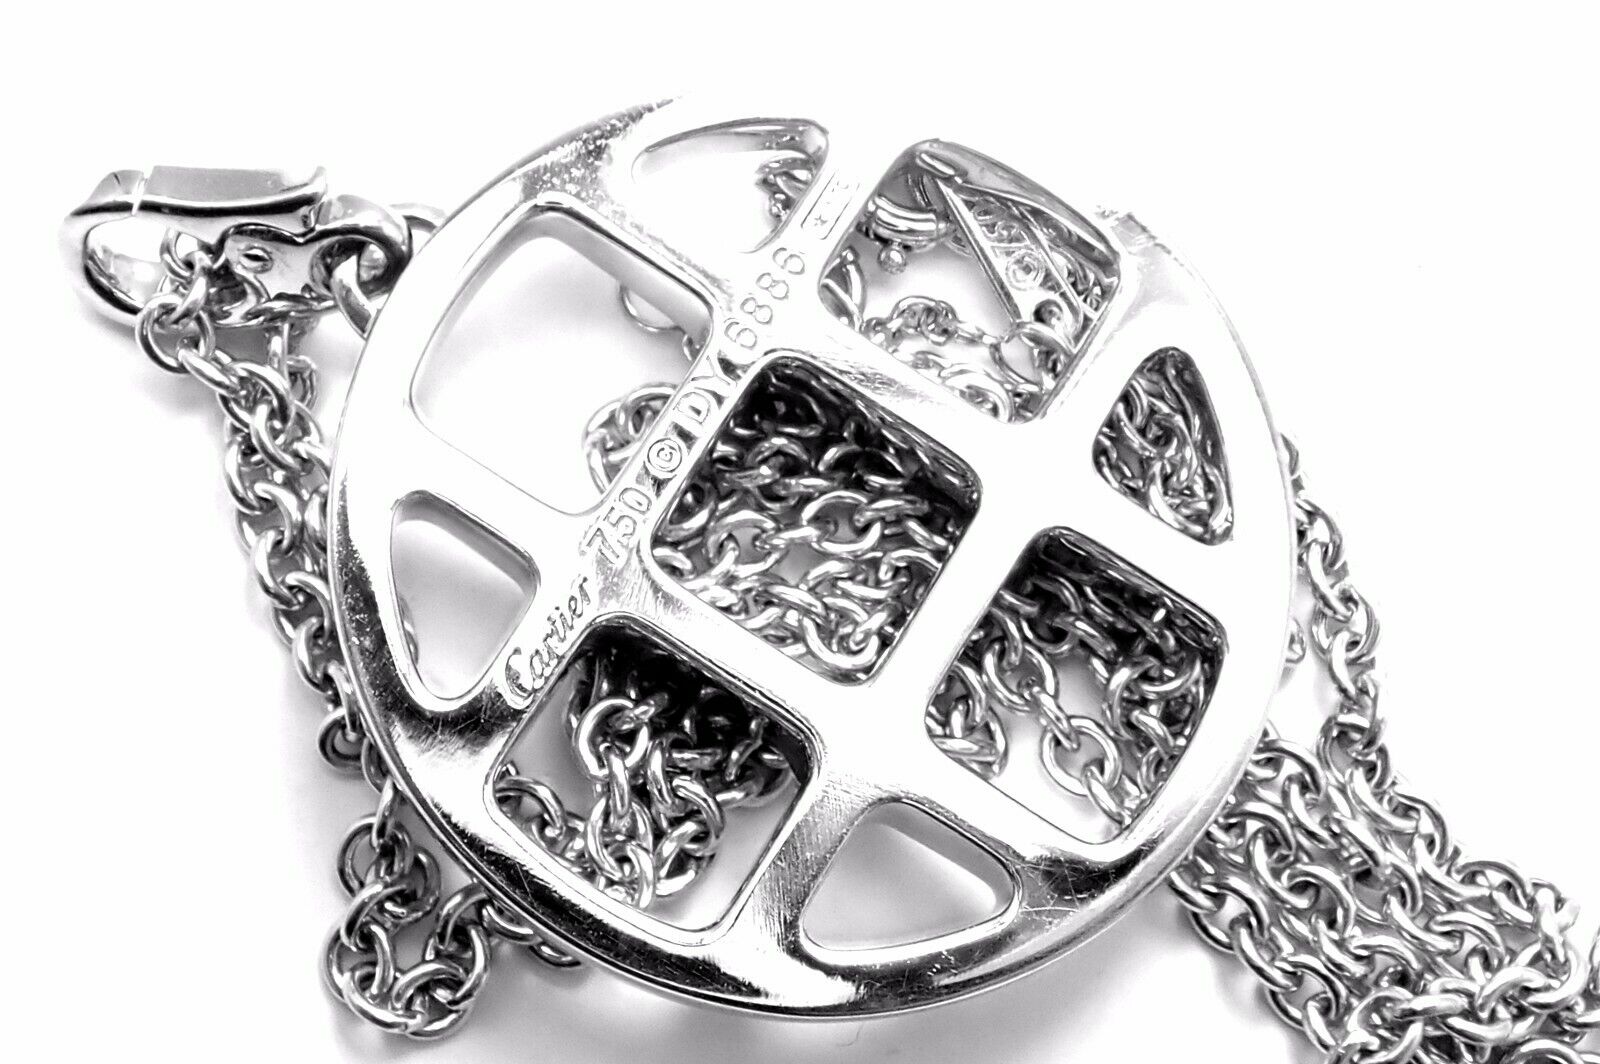 Cartier Jewelry & Watches:Vintage & Antique Jewelry:Necklaces & Pendants Authentic! Cartier 18k White Gold Pasha Large Pendant Chain Necklace